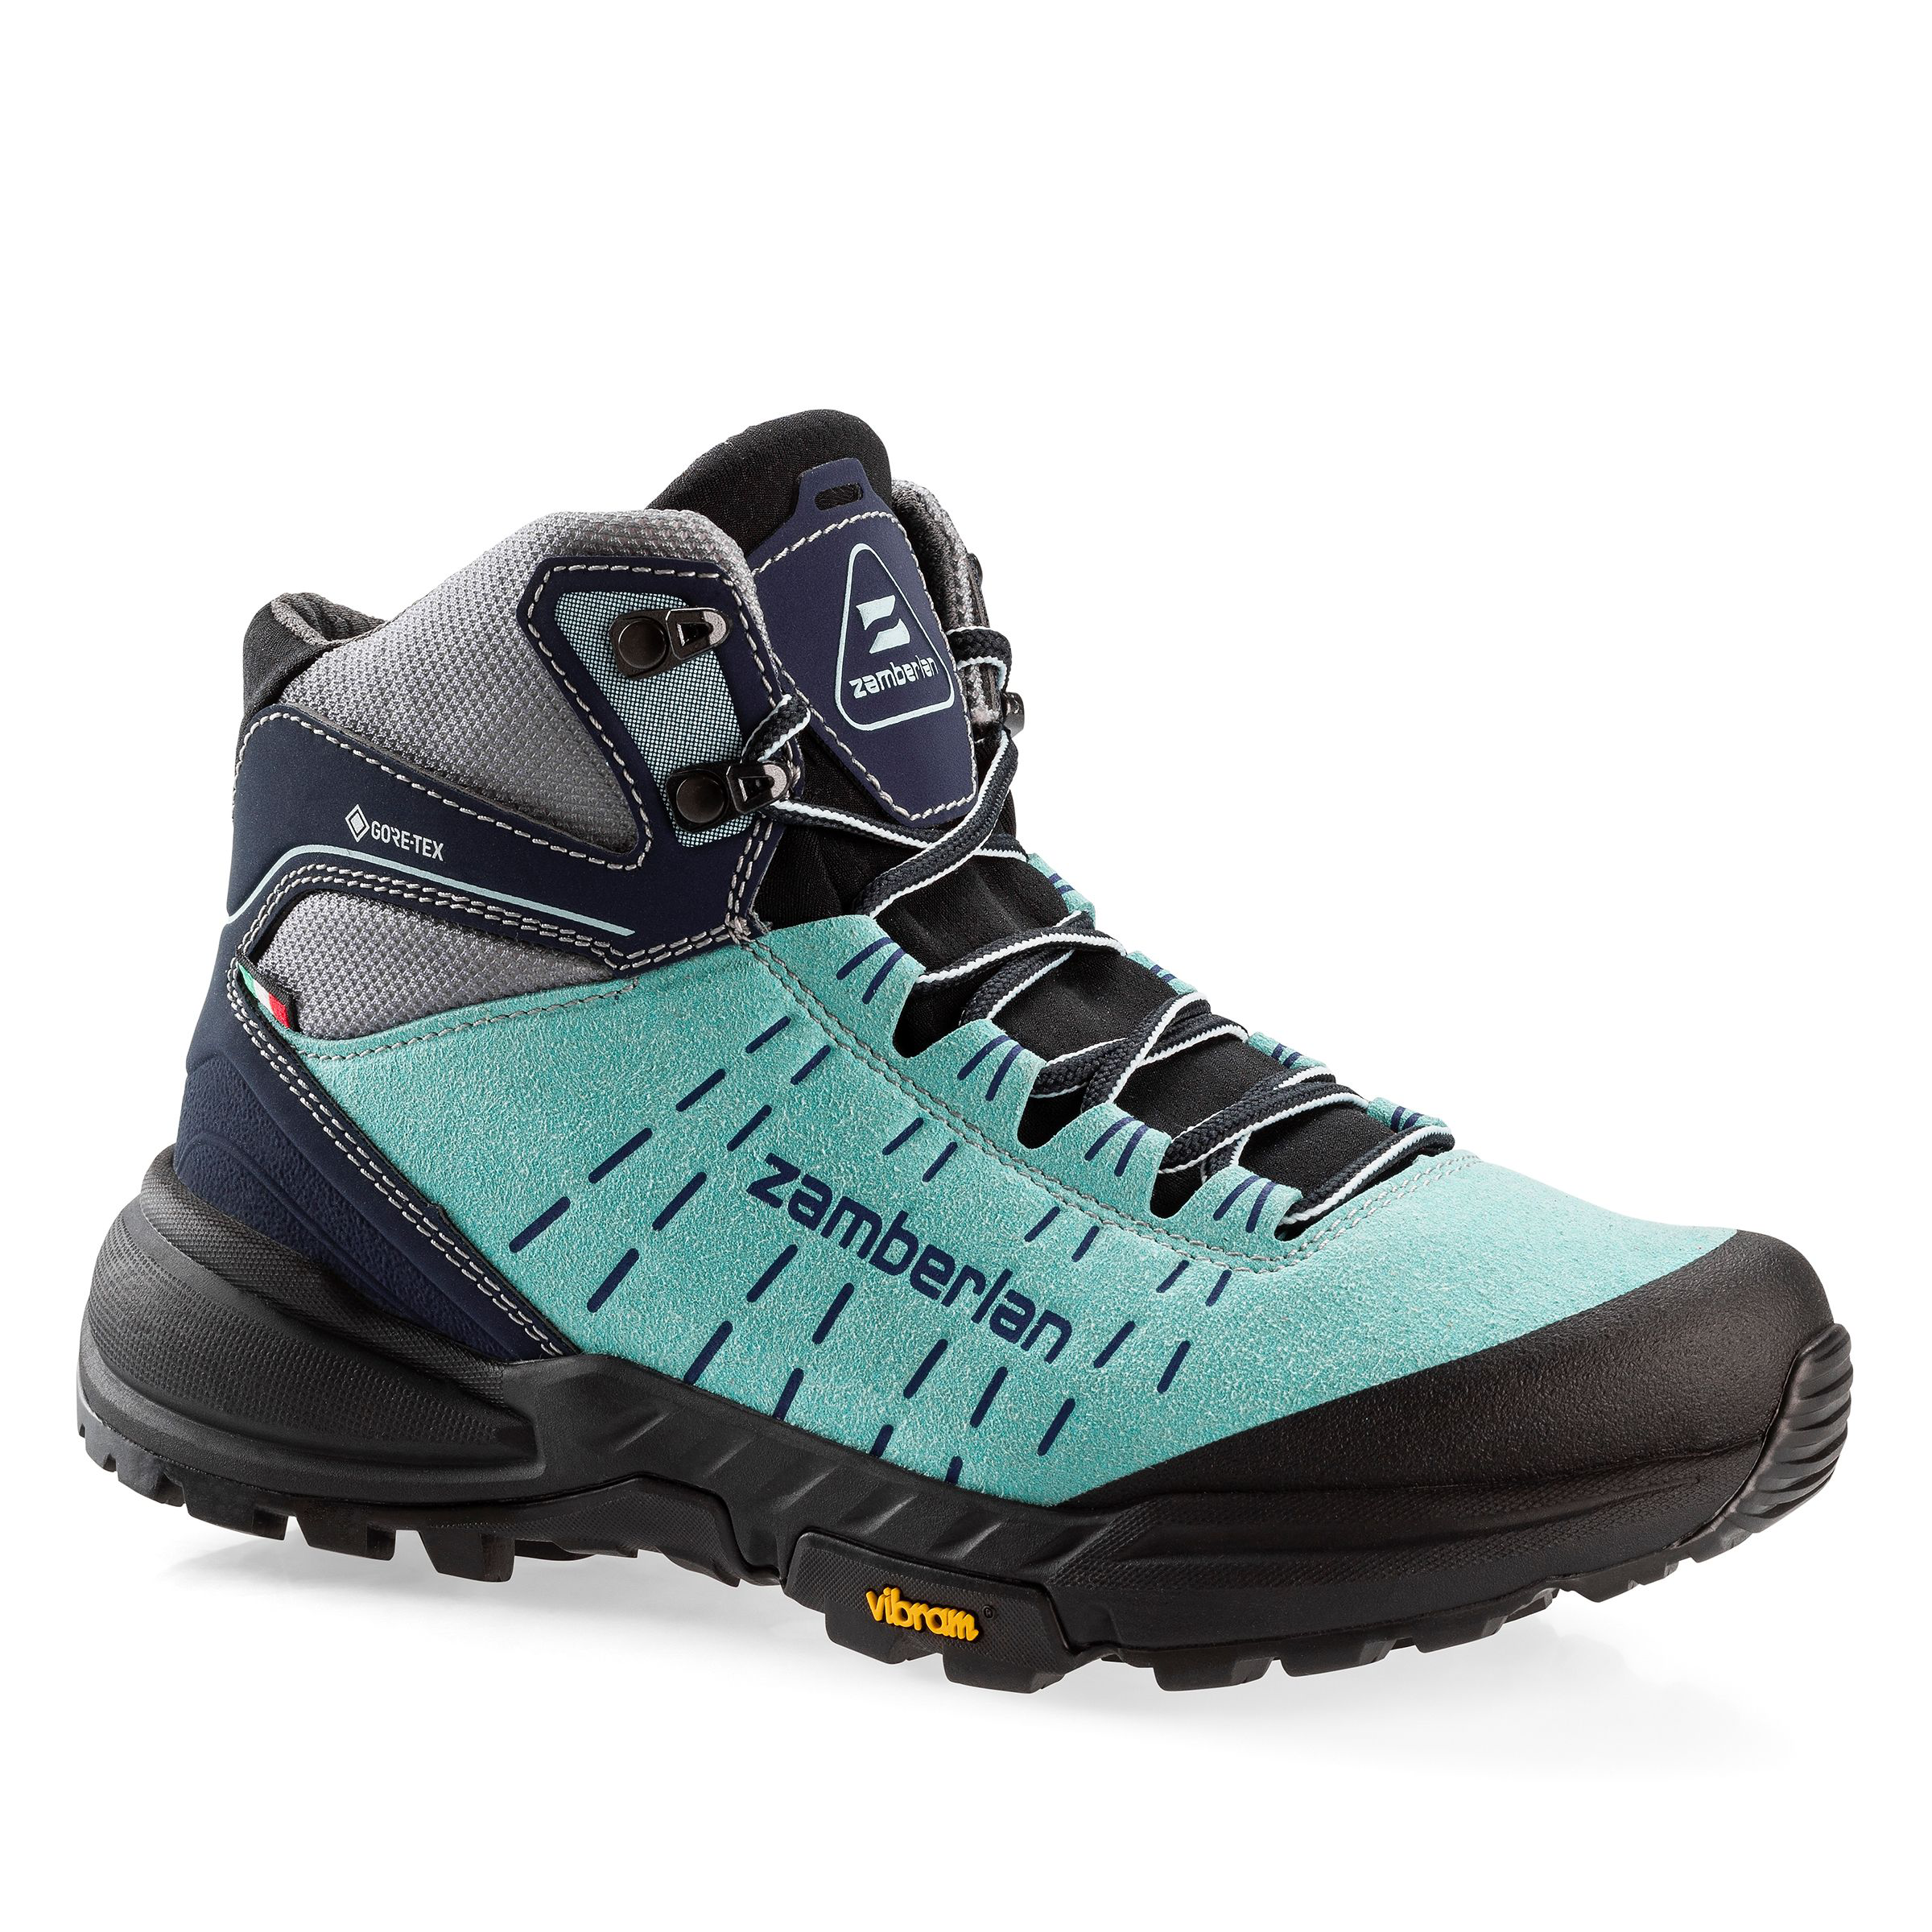 Zamberlan 334 Circe GTX Waterproof Hiking Boots for Ladies - Blue - 6M